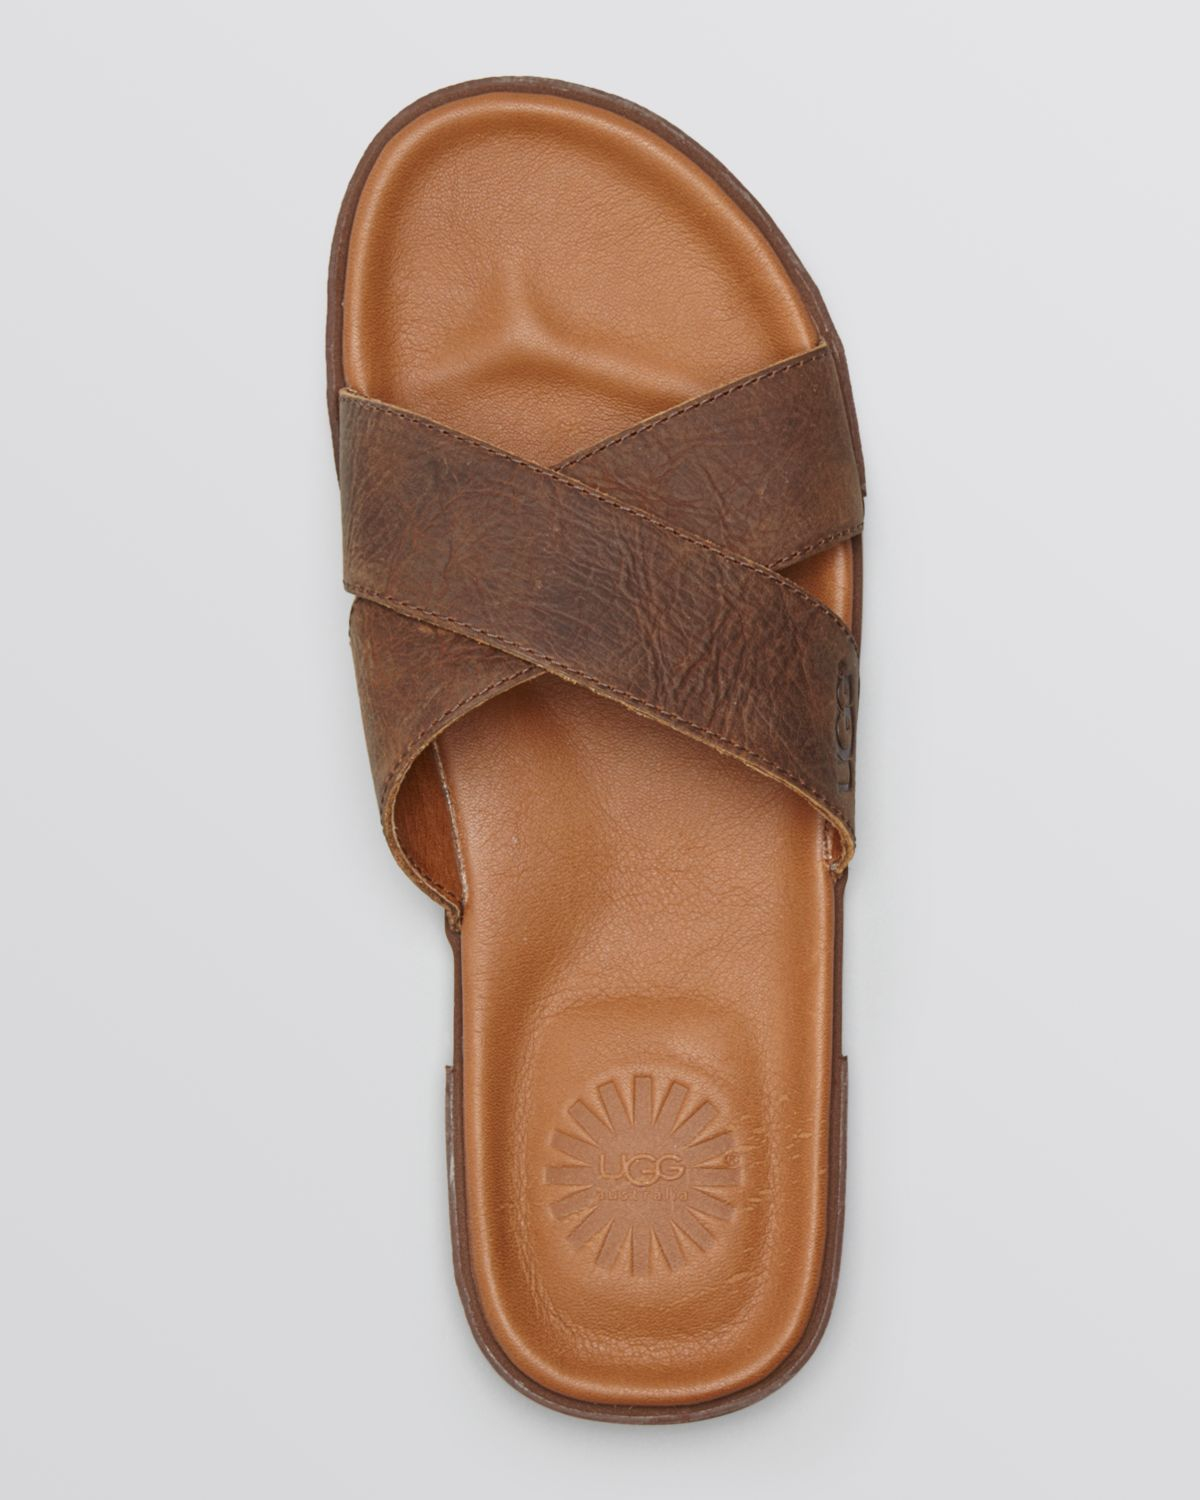 Lyst - Ugg Ithan Slide Sandals in Brown for Men